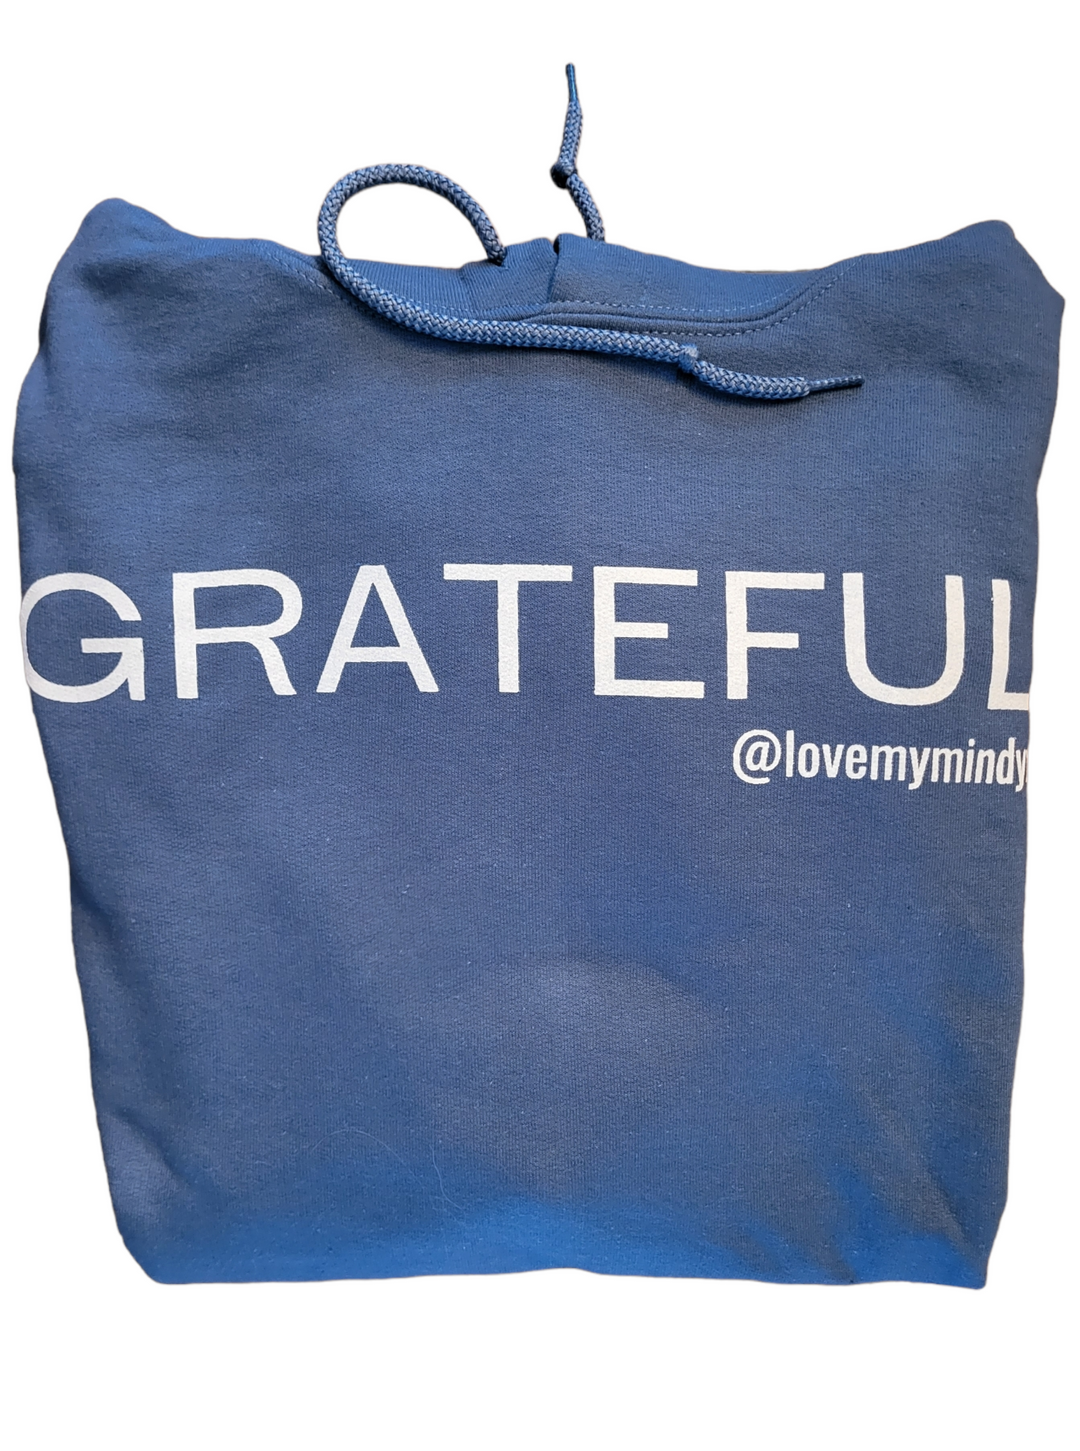 Adult Hooded Sweatshirt - Grateful @lovemymind - Indigo Blue